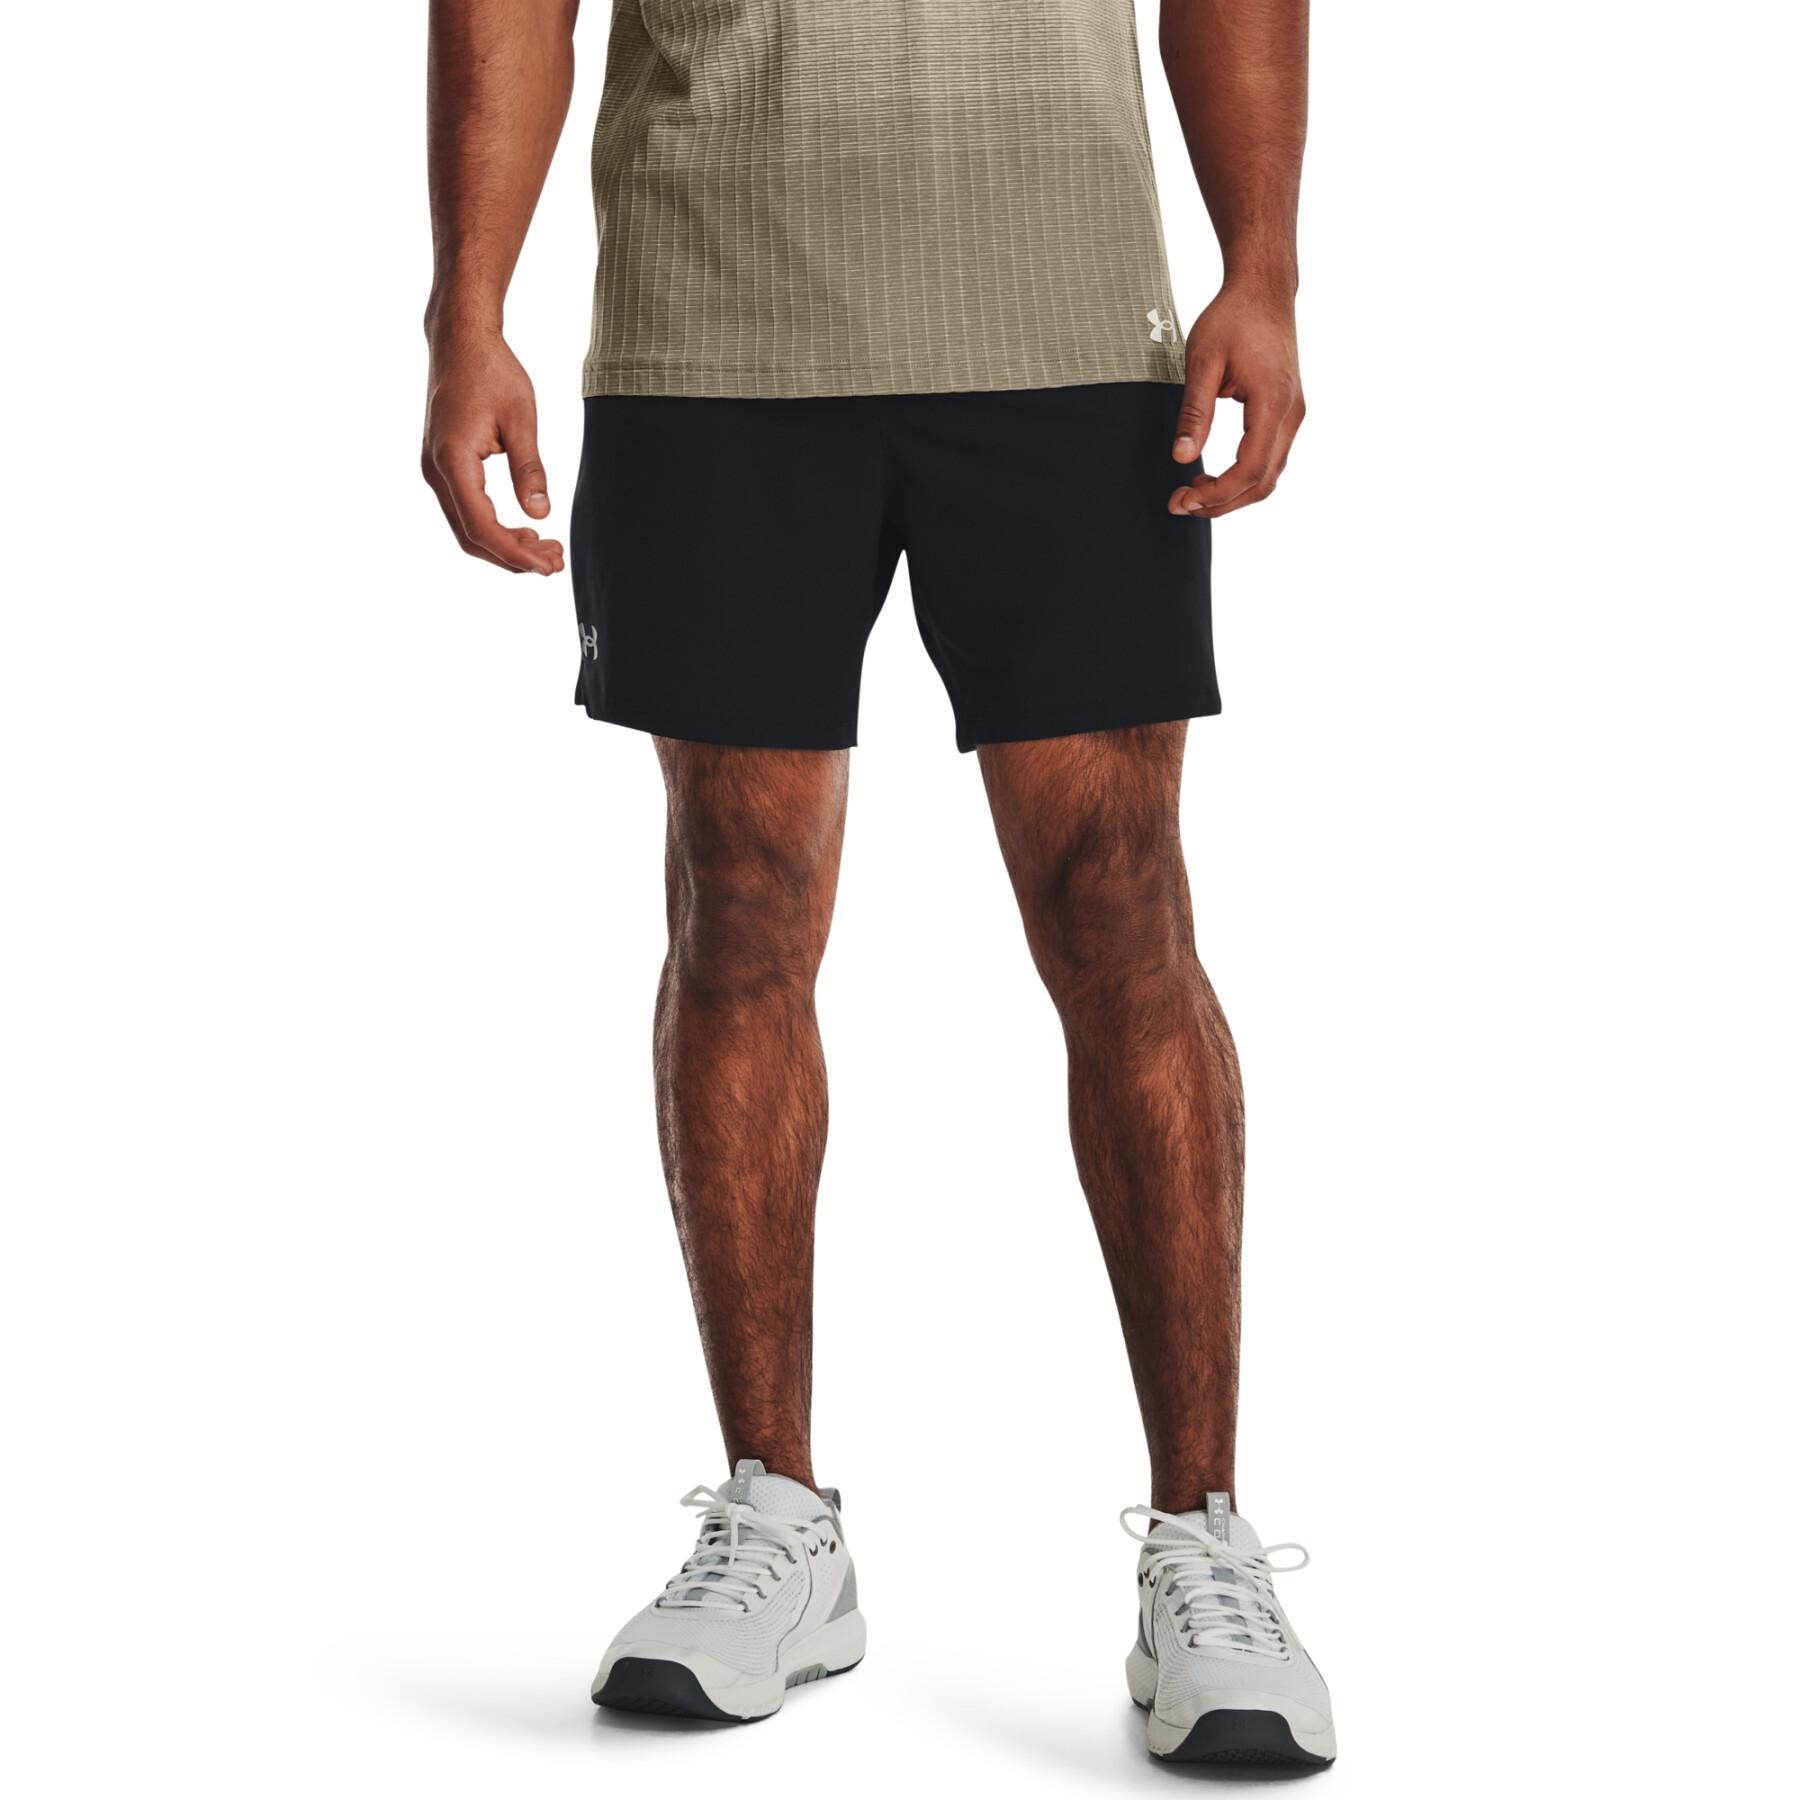 Geweven shorts Under Armour Vanish 26 cm